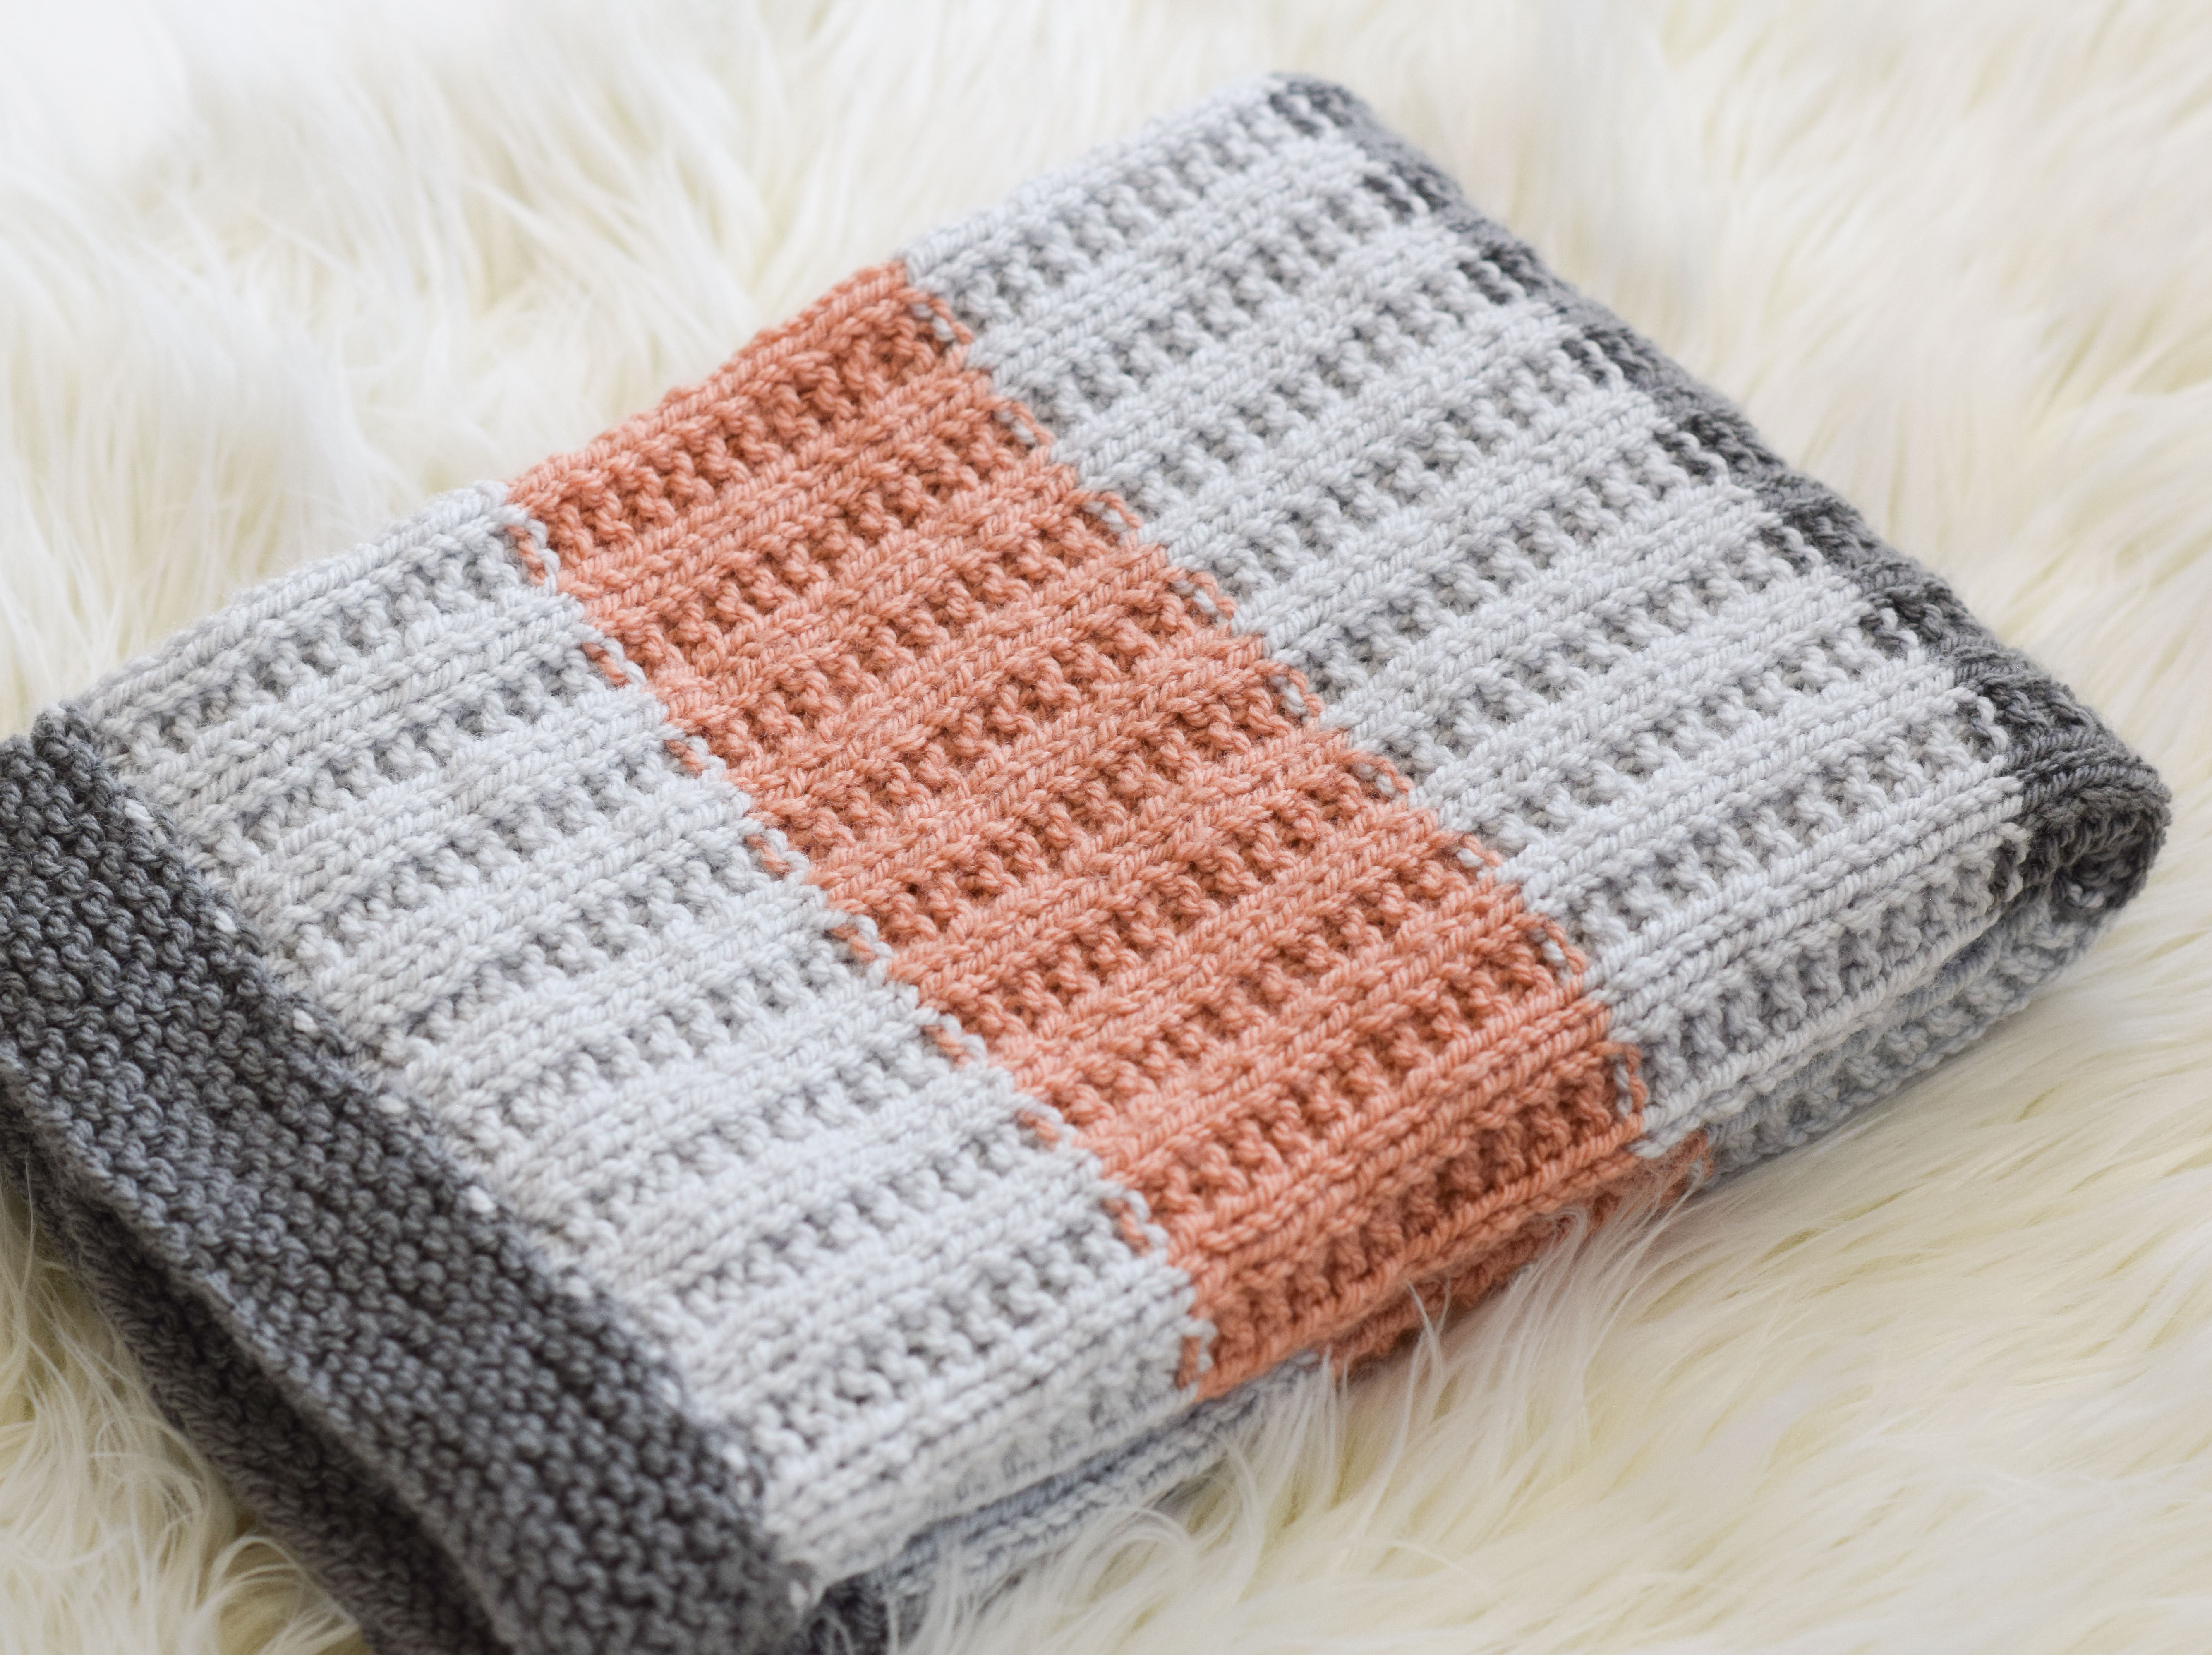 Simple baby blanket knitting patterns free